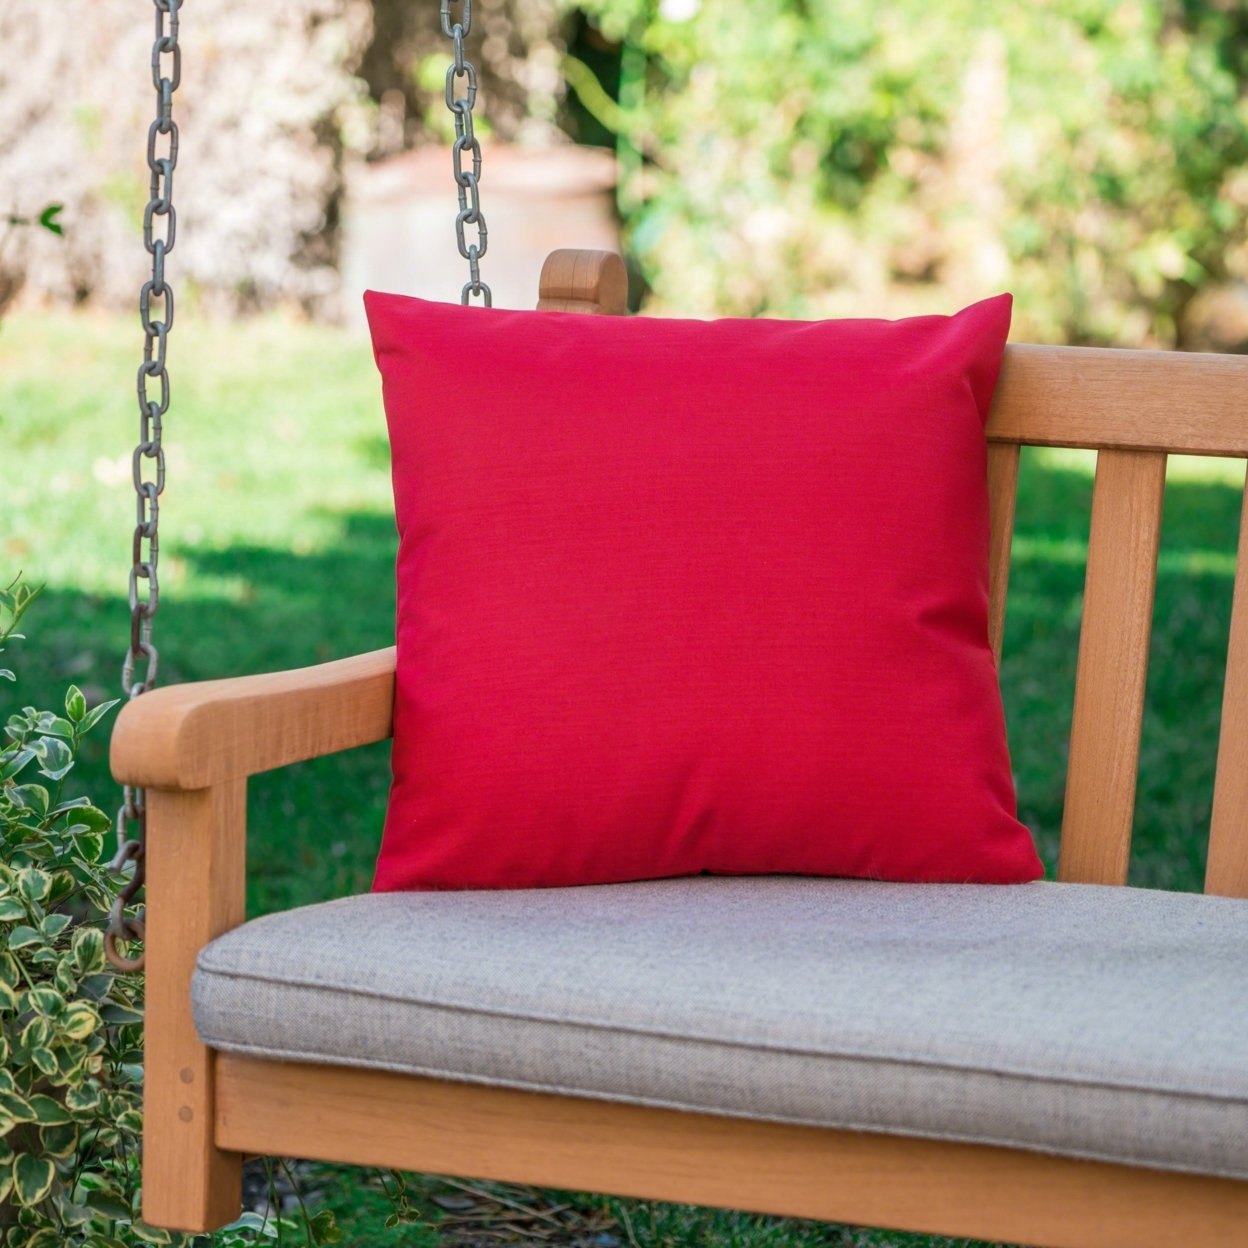 Coronado Outdoor Water Resistant Square Throw Pillow - Red, Single